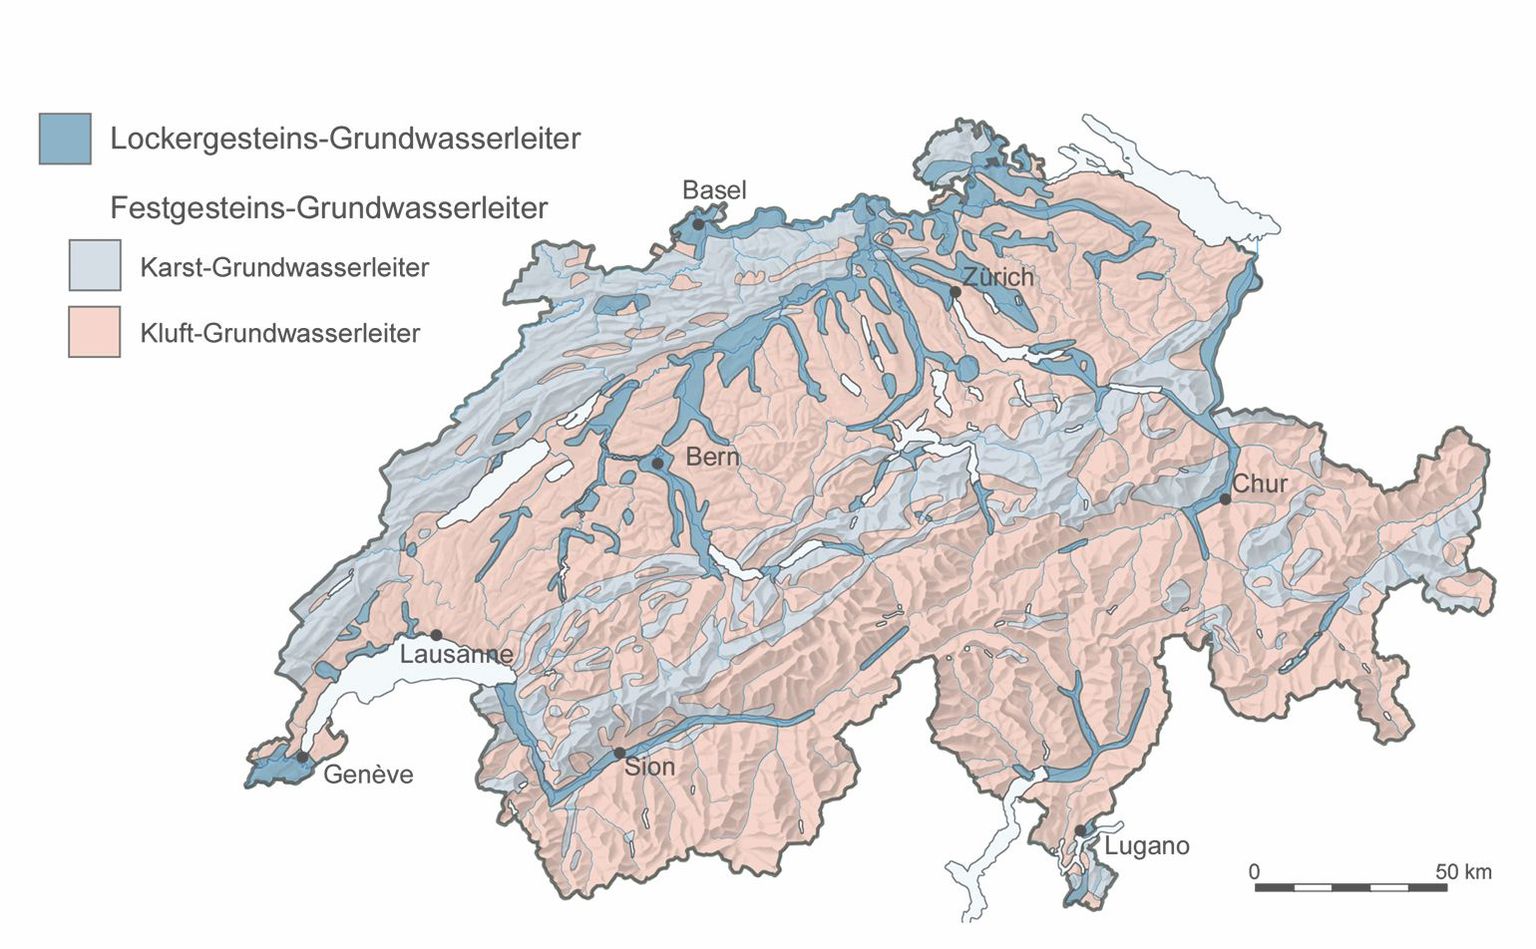 Hydrogeological sketch of Switzerland